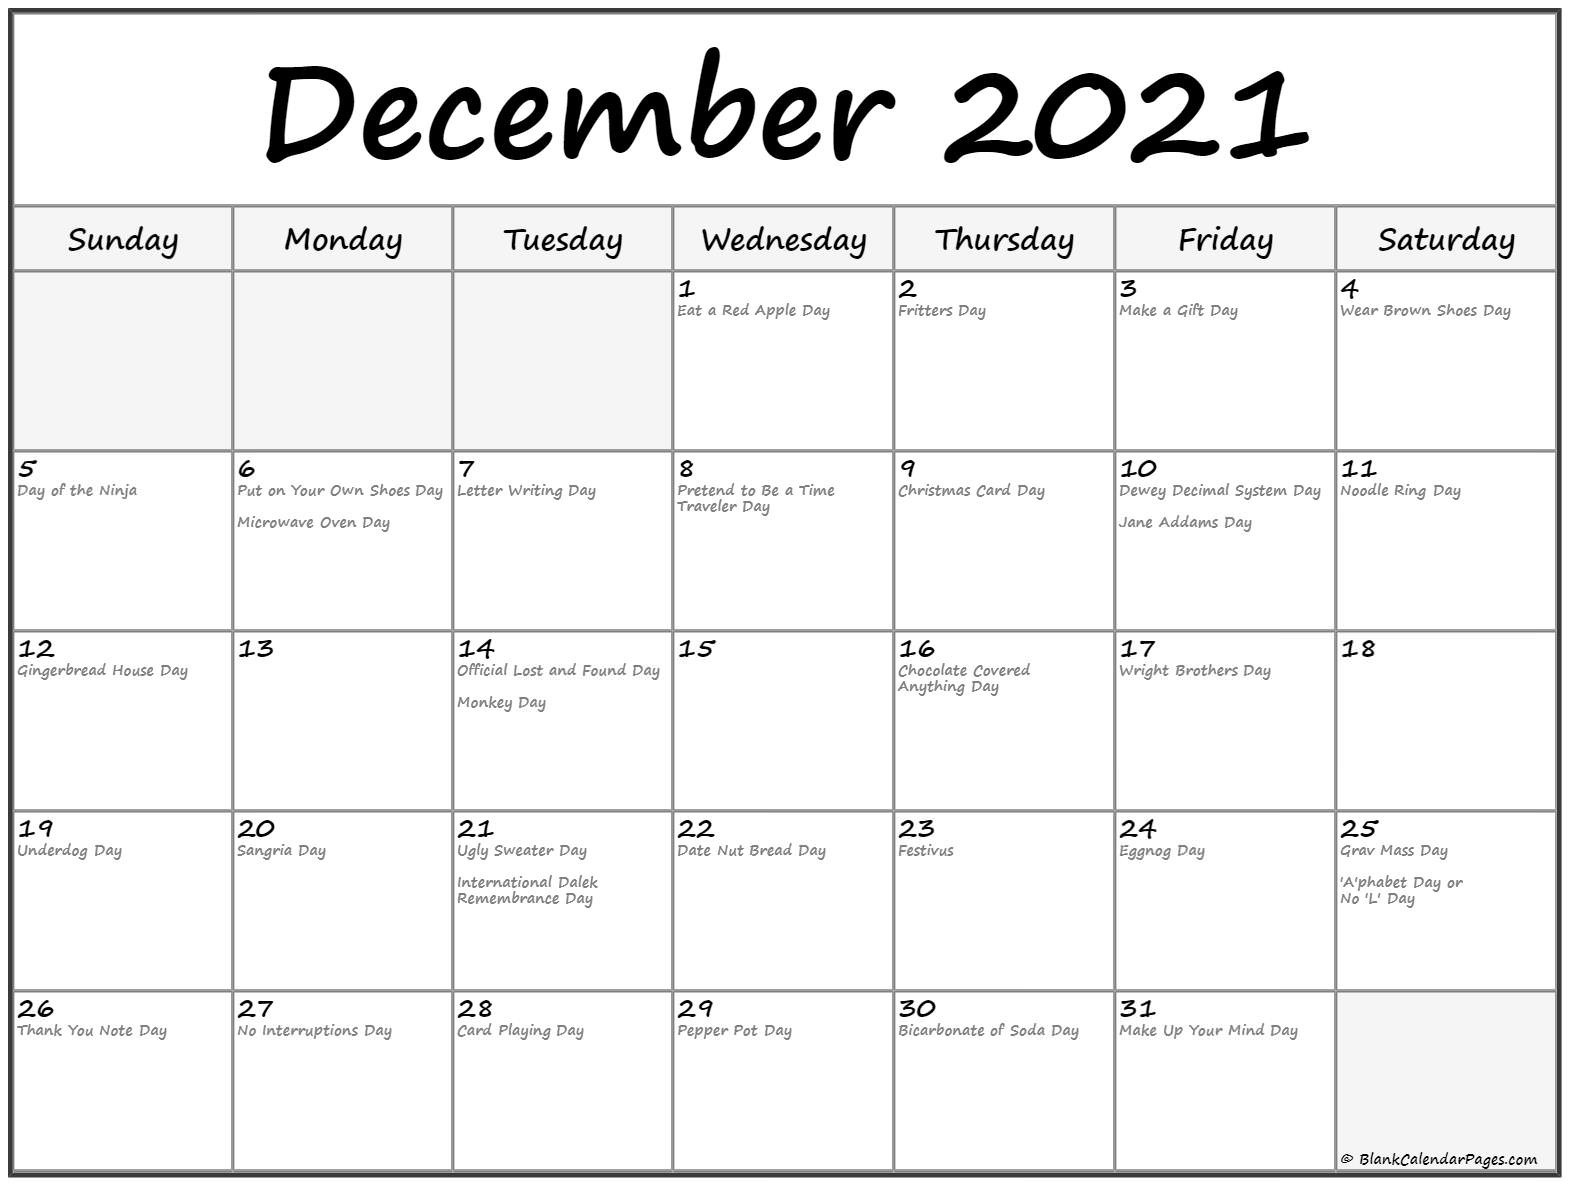 December 2021 Calendar With Holidays | Free Printable Calendar Monthly December 2021 Calendar With Holidays Printable